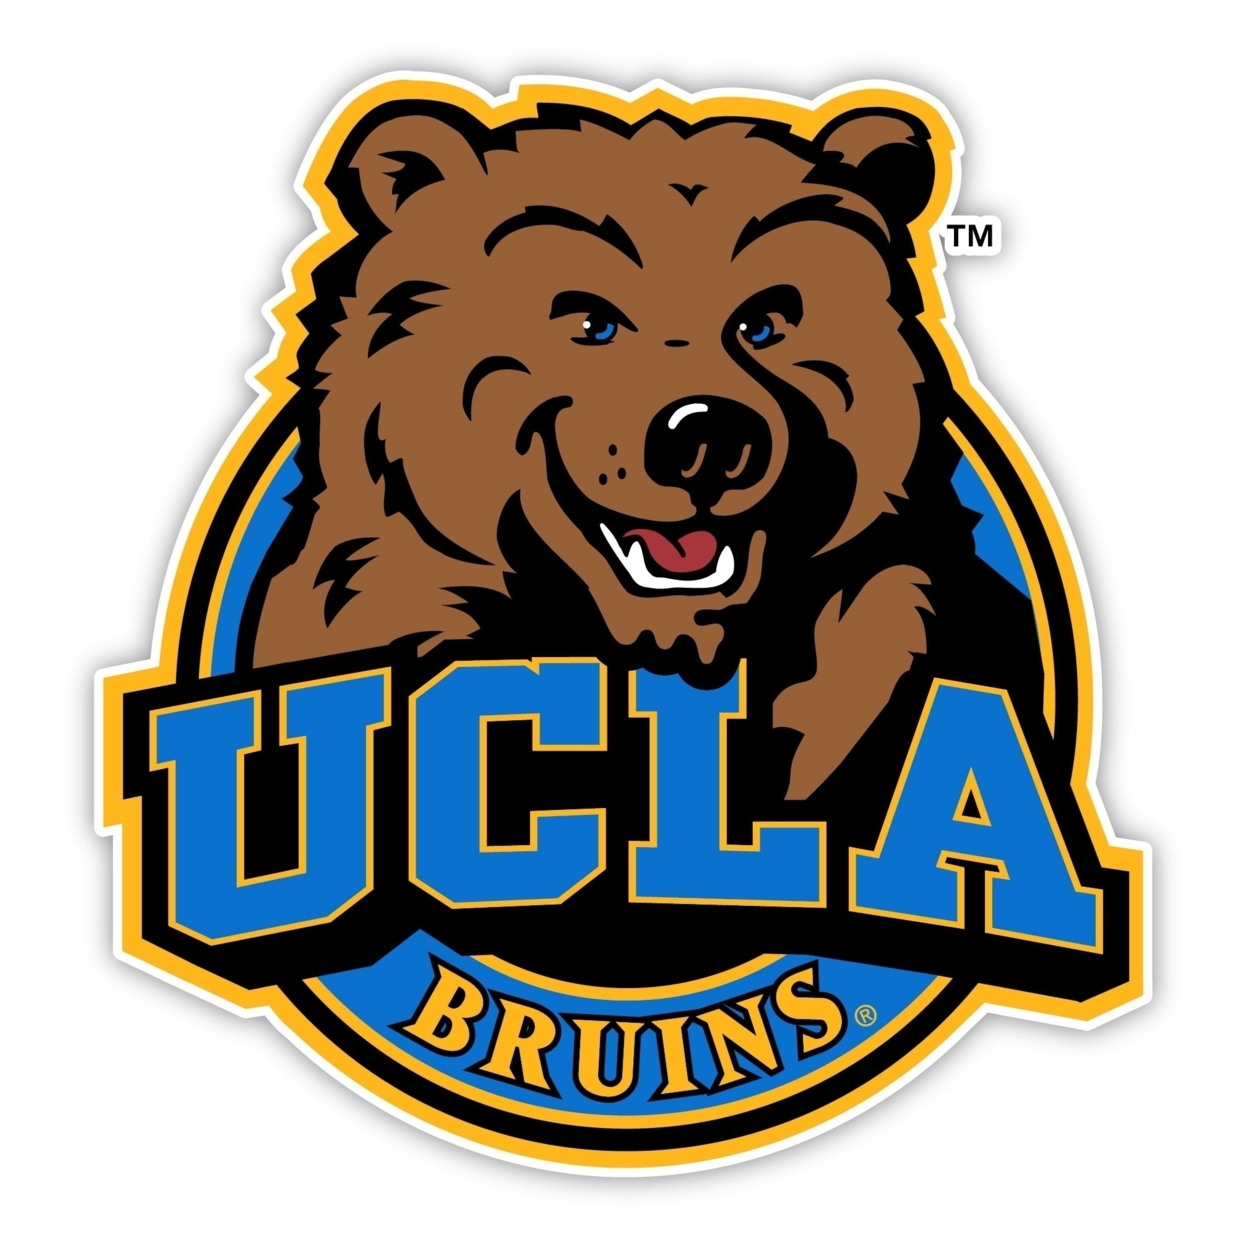 UCLA Bruins 2 Inch Vinyl Mascot Decal Sticker - 1, 2-Inch